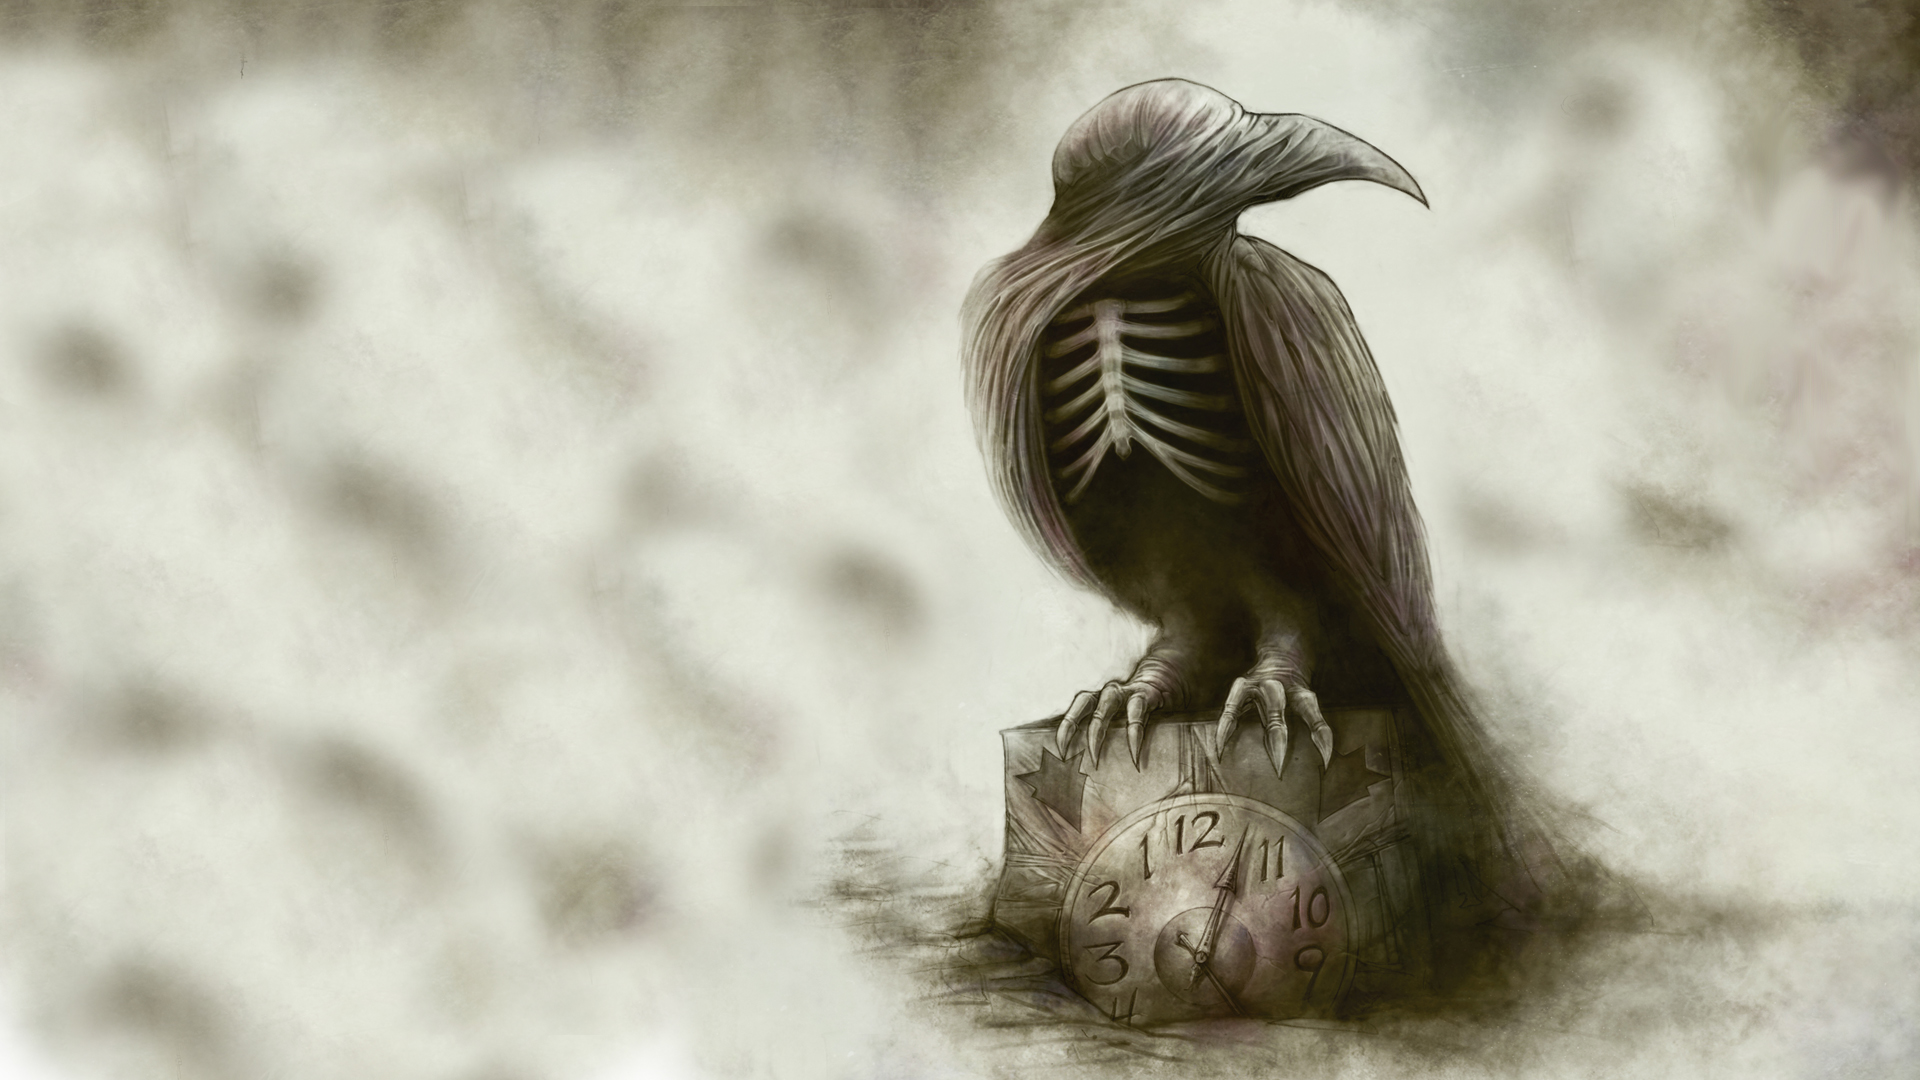  Abstract Creepy Skeleton poe raven gothic dark wallpaper background 1920x1080